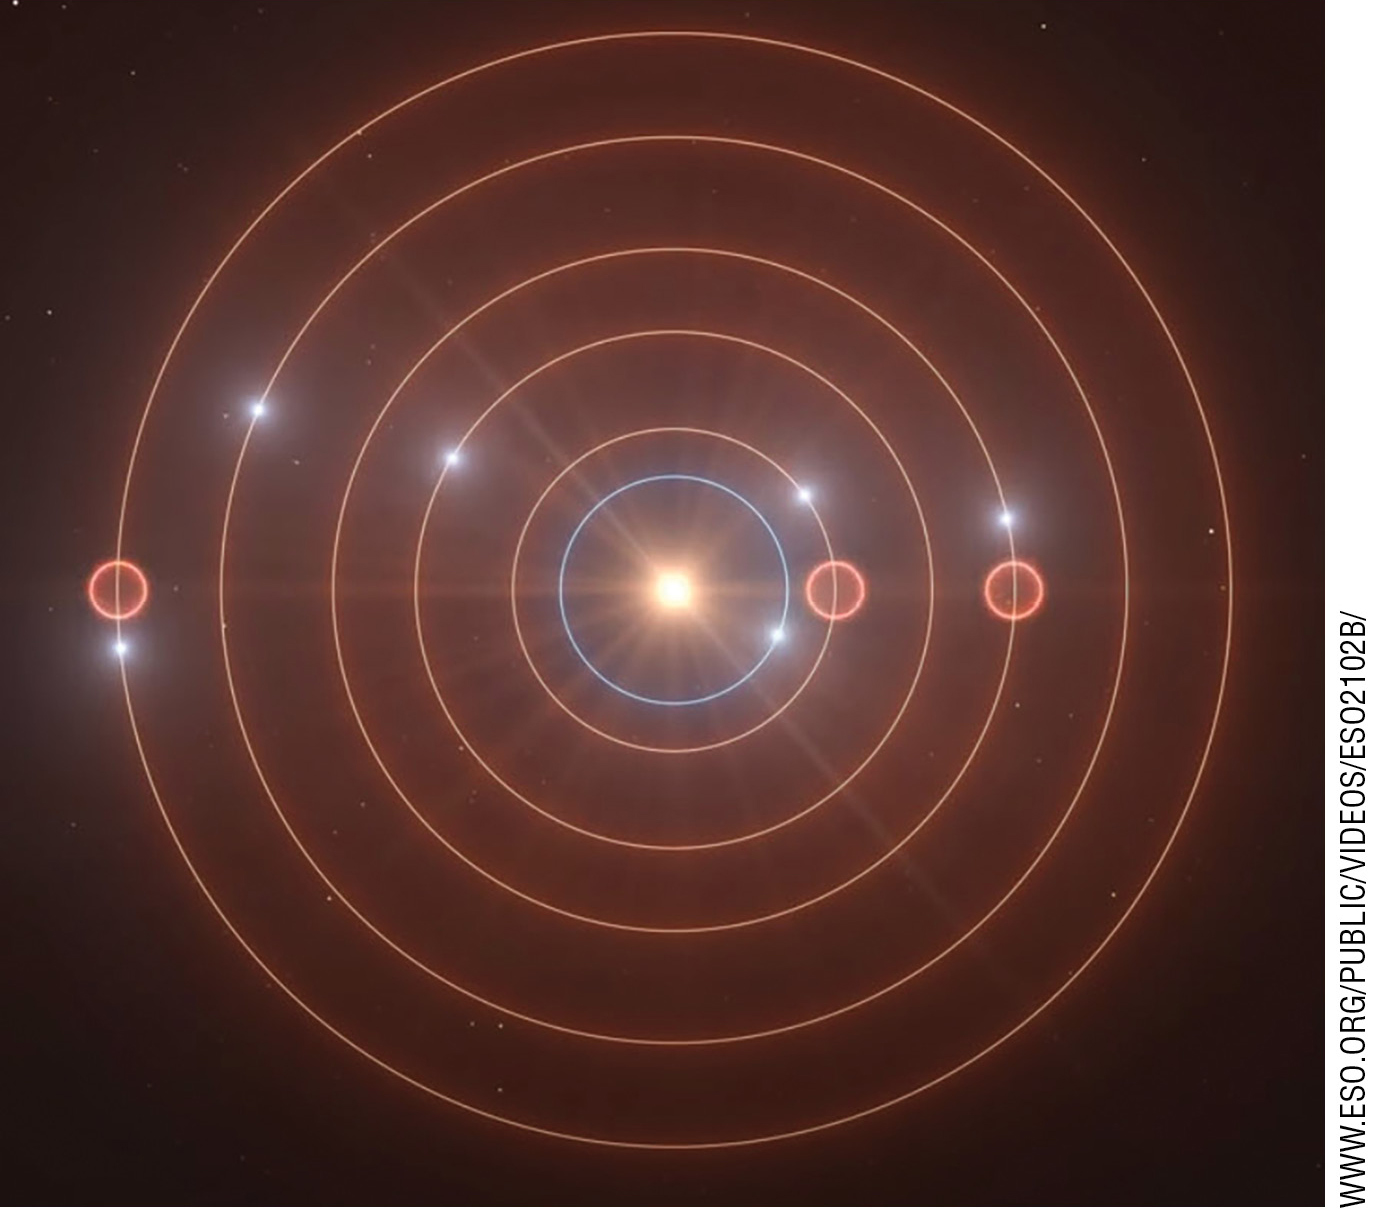 Orbital resonance of planets orbiting TOI-128.